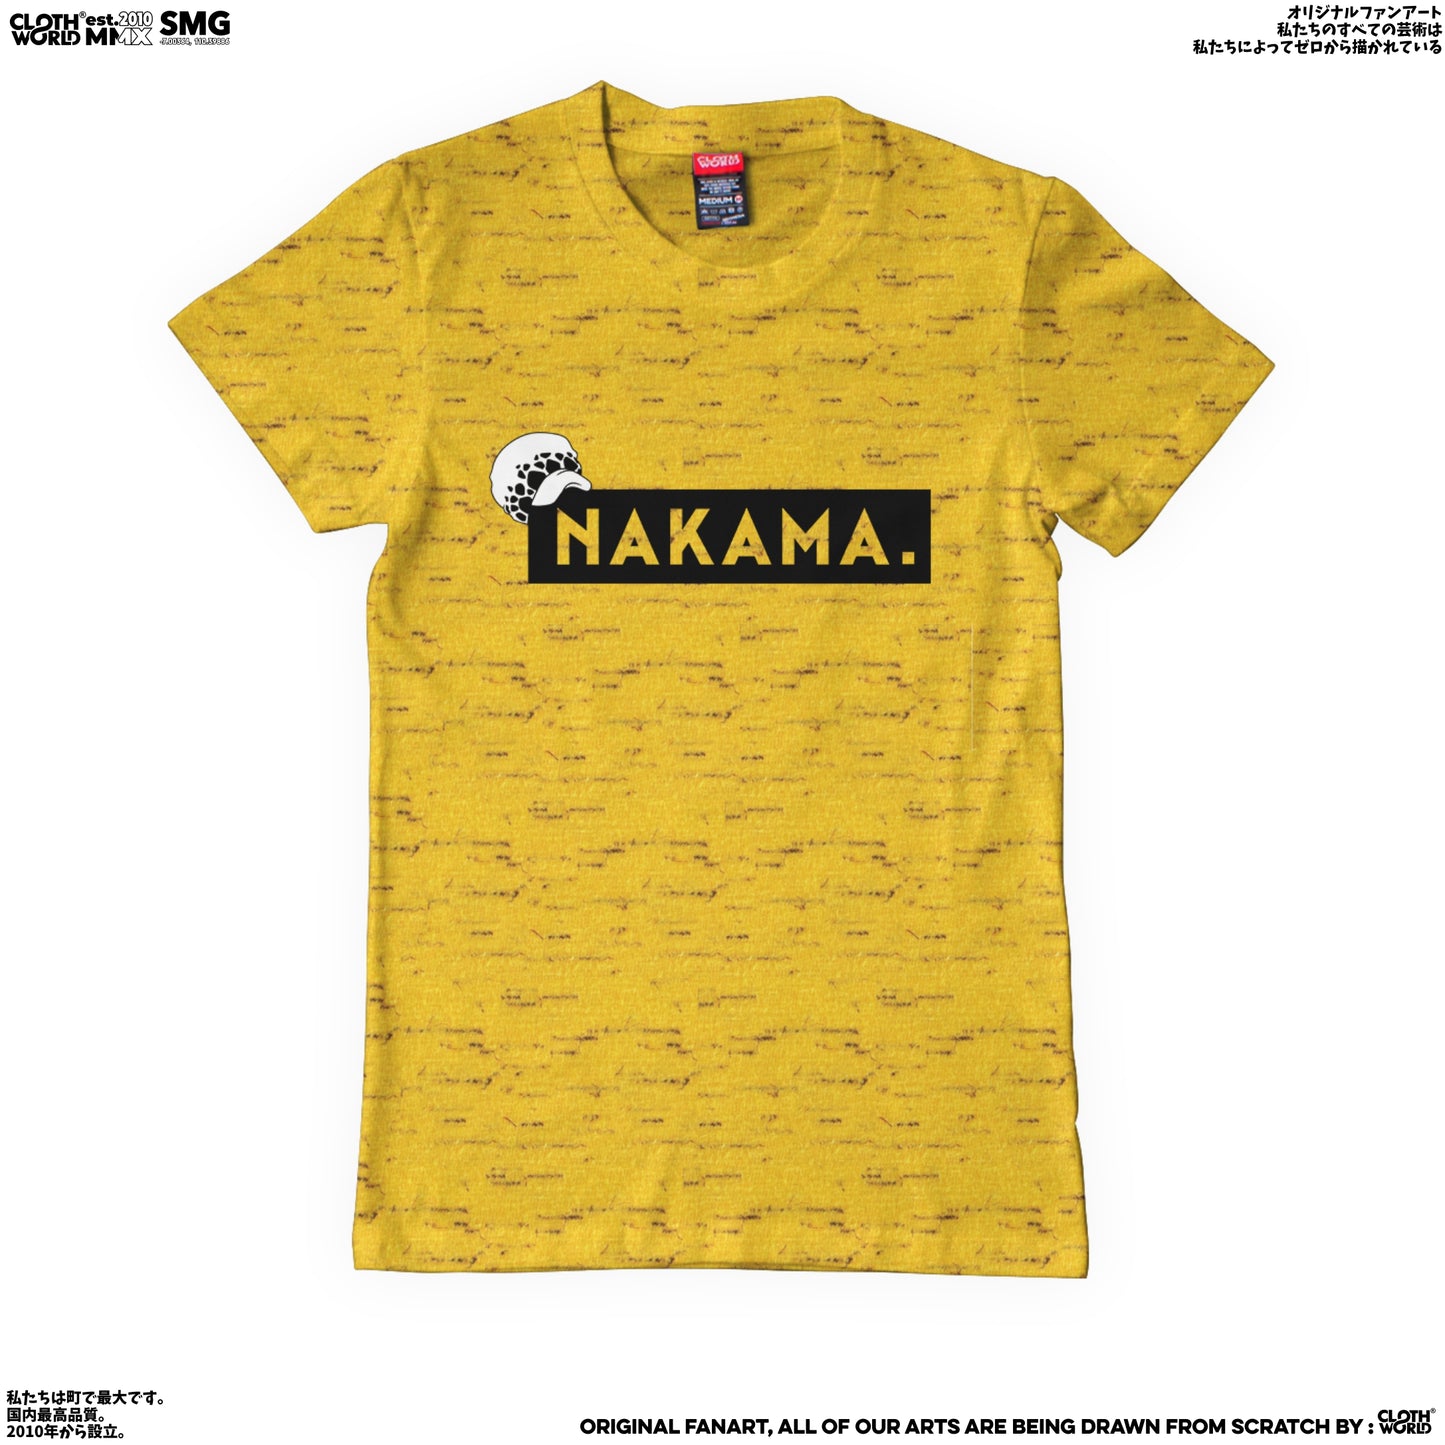 NAKAMA Law T-Shirt